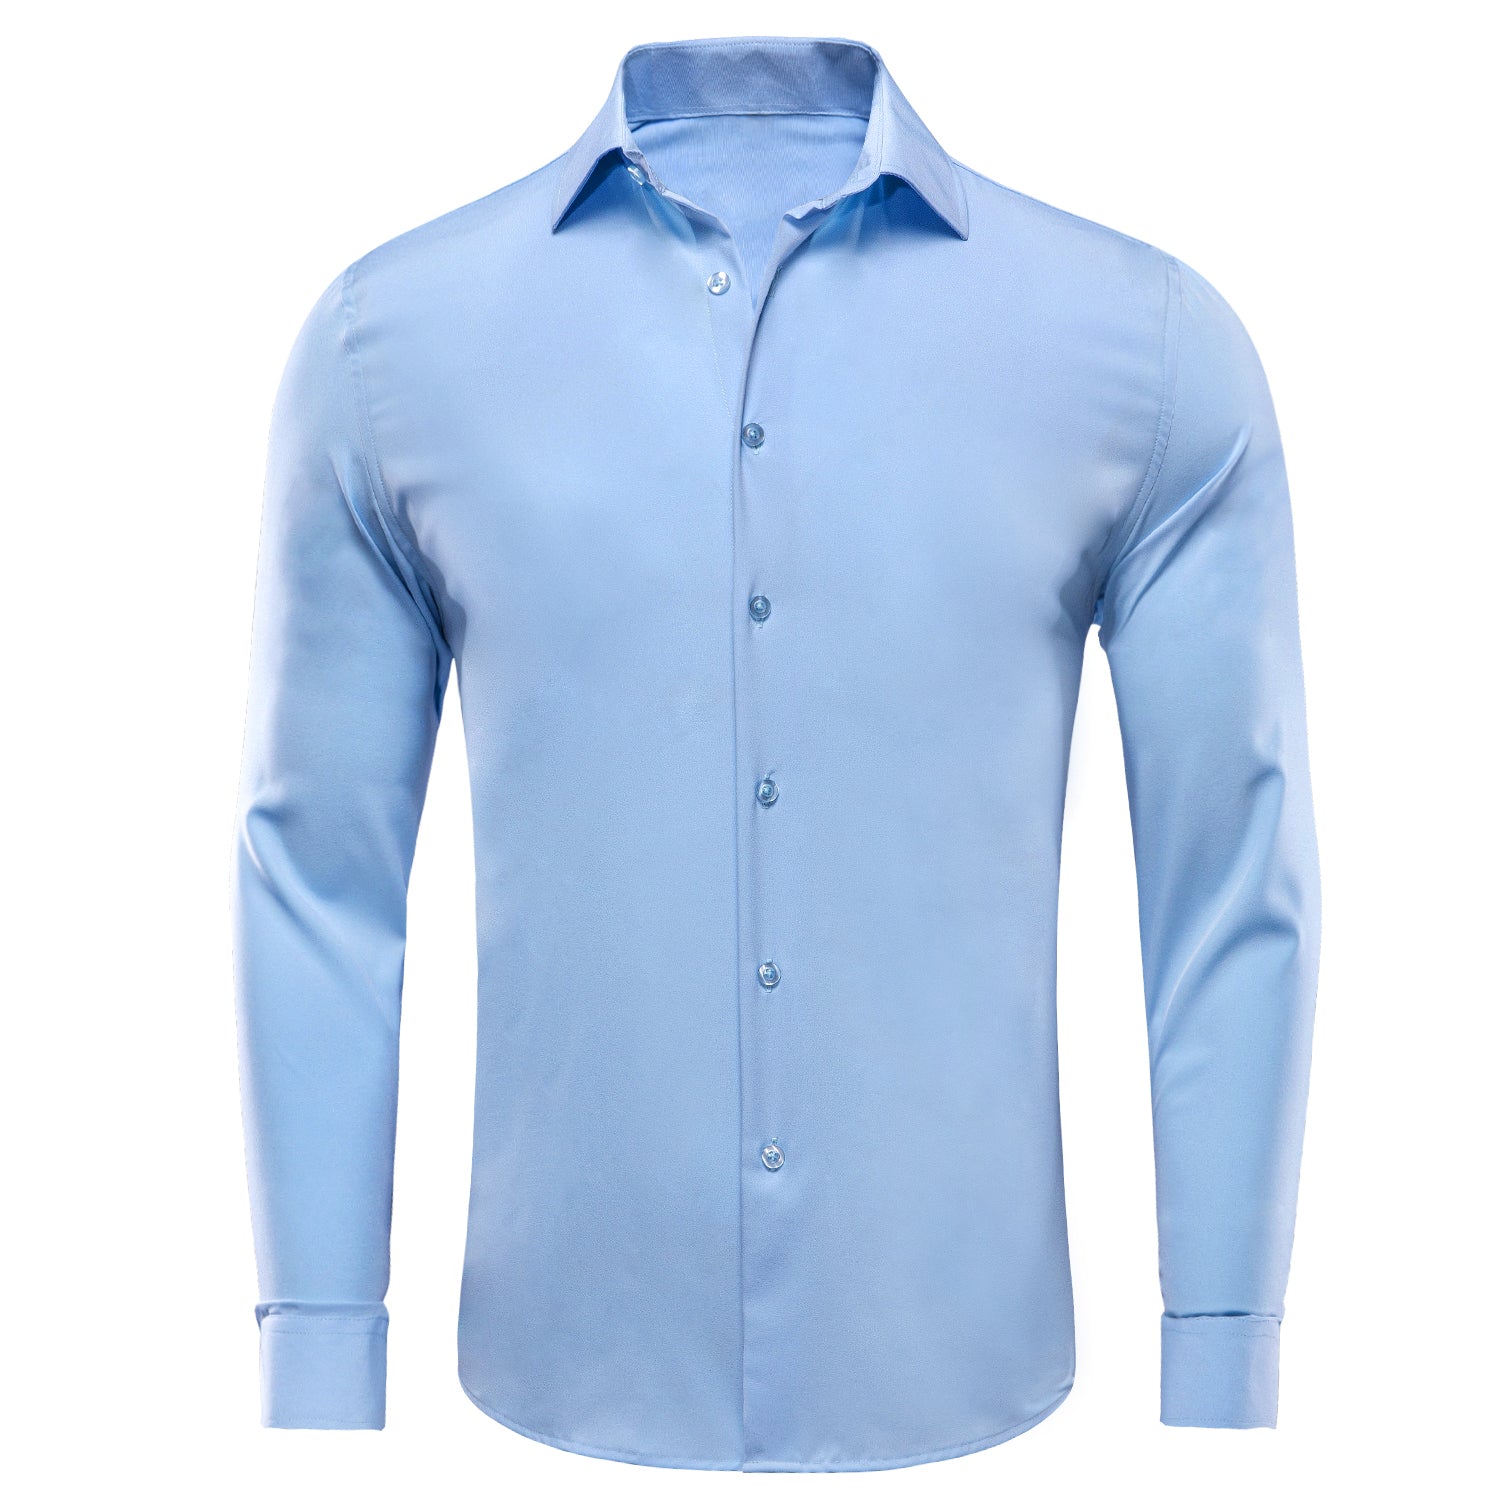 Sky blue dress shirt winsdor collar shirt for businee